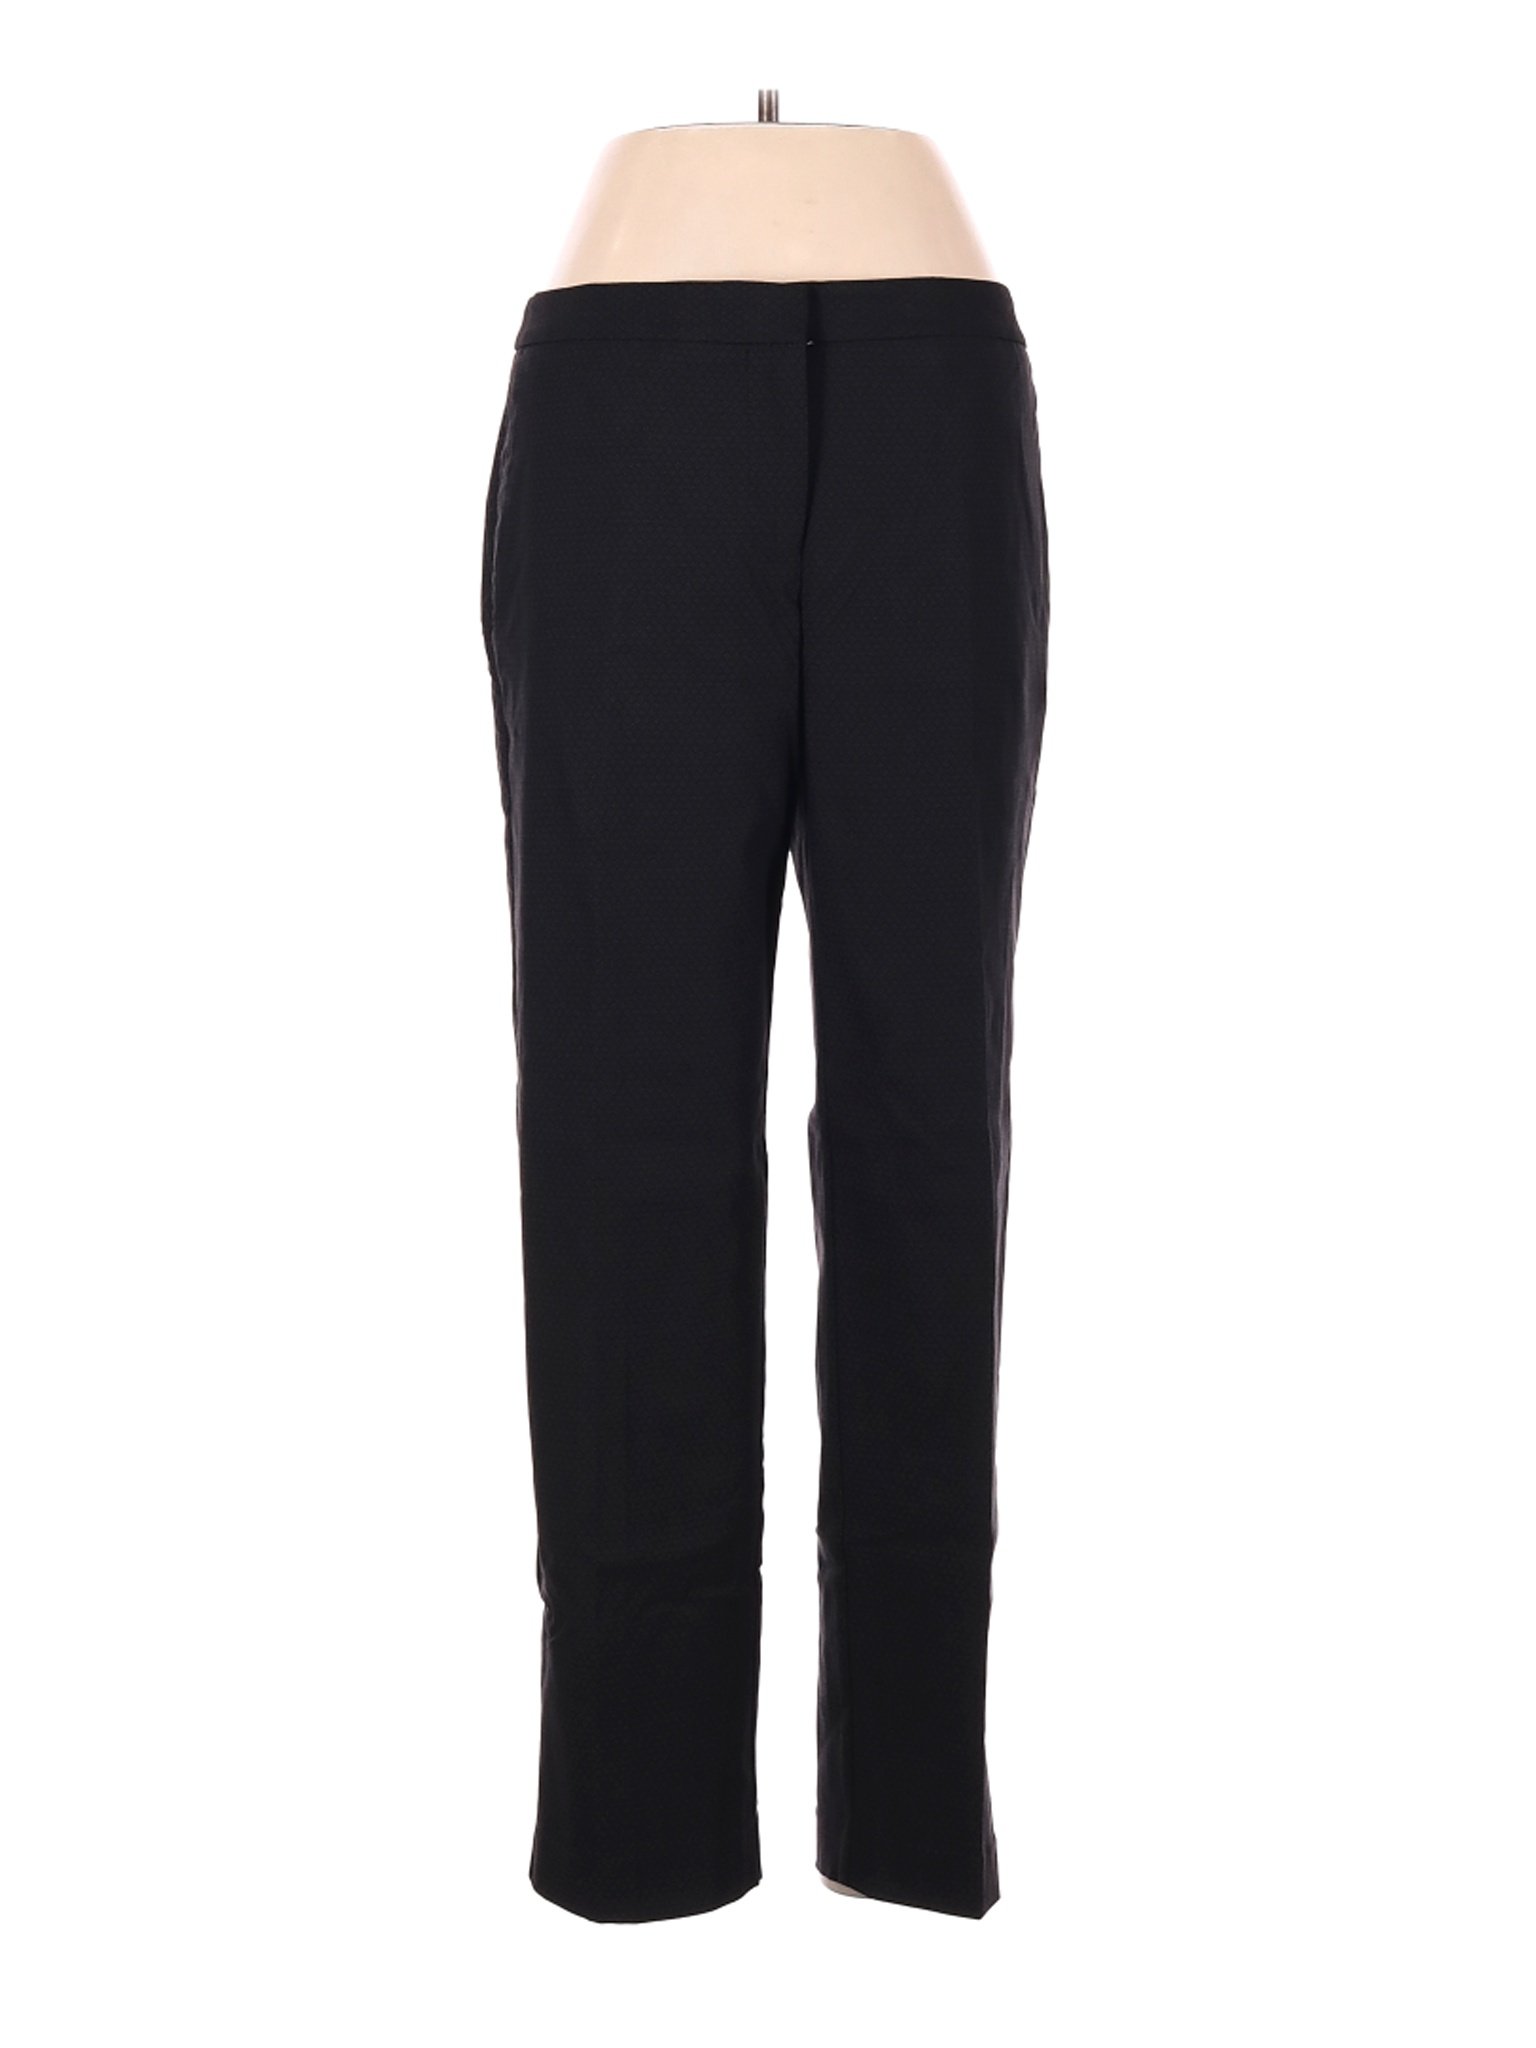 NWT Mario Serrani Women Black Dress Pants 6 | eBay